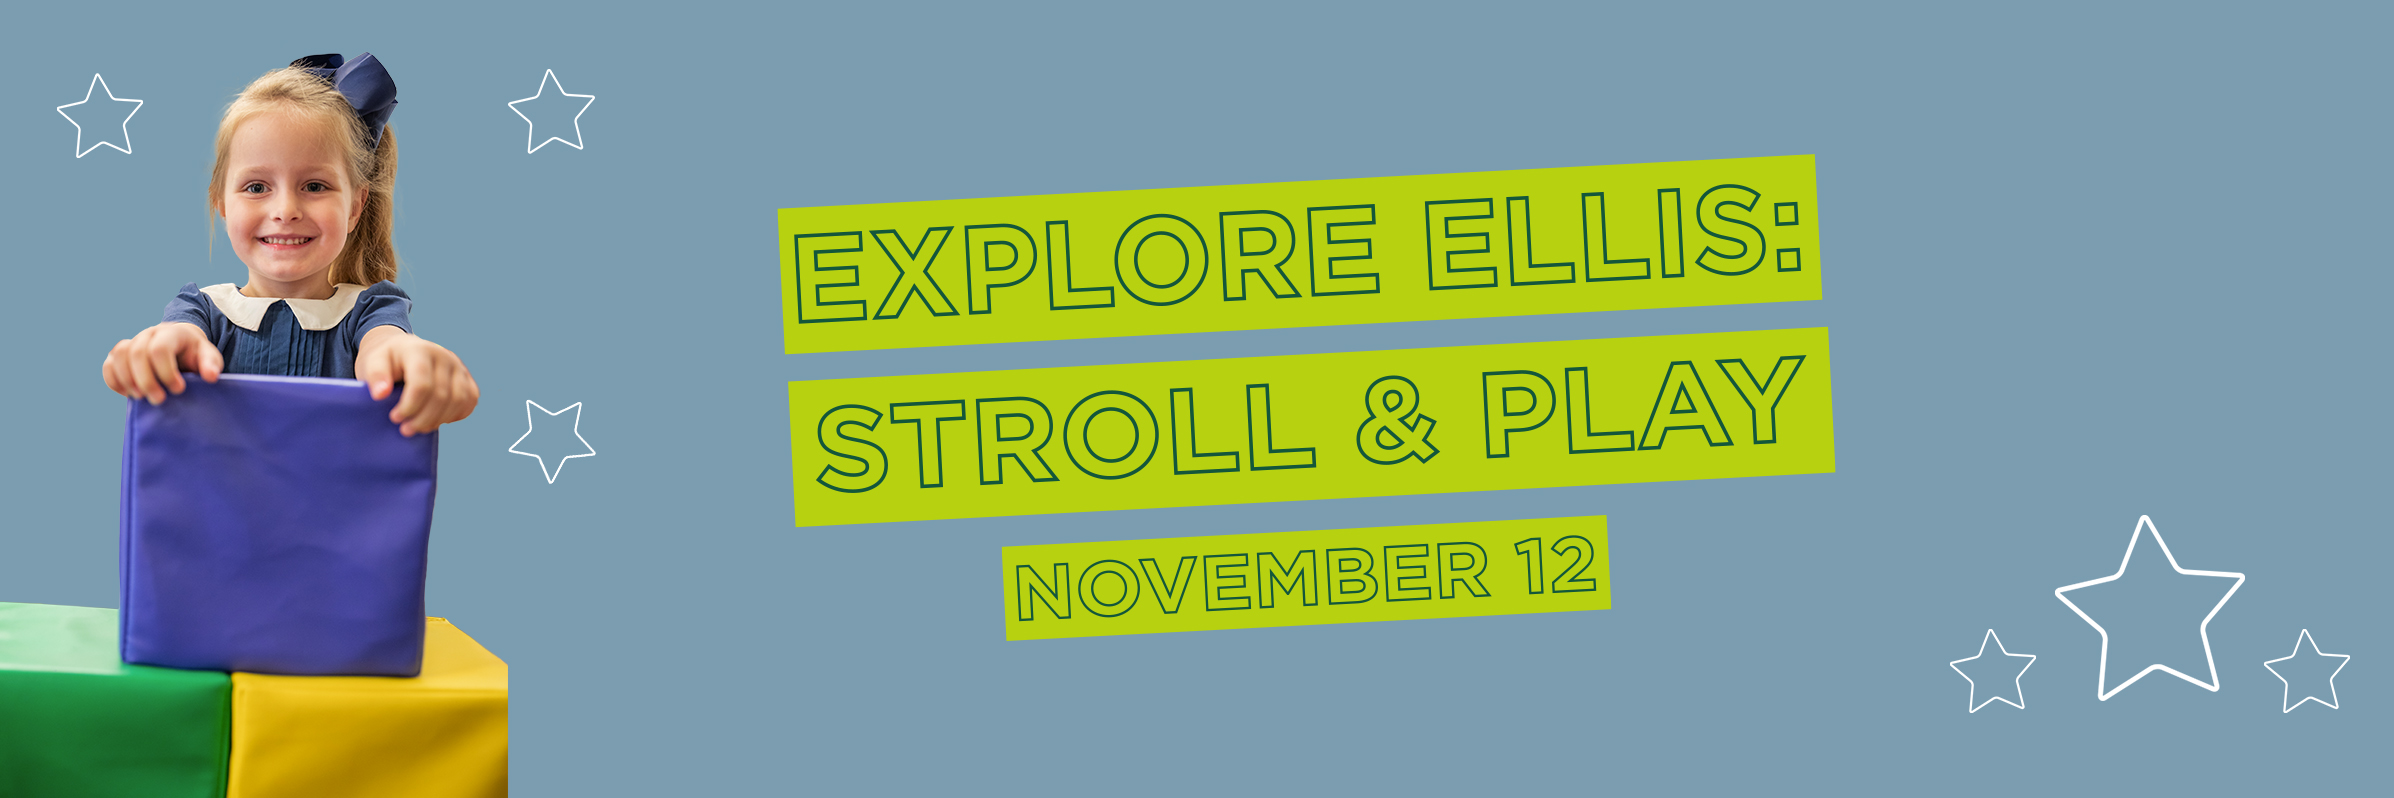 Explore Ellis: Stroll & Play 